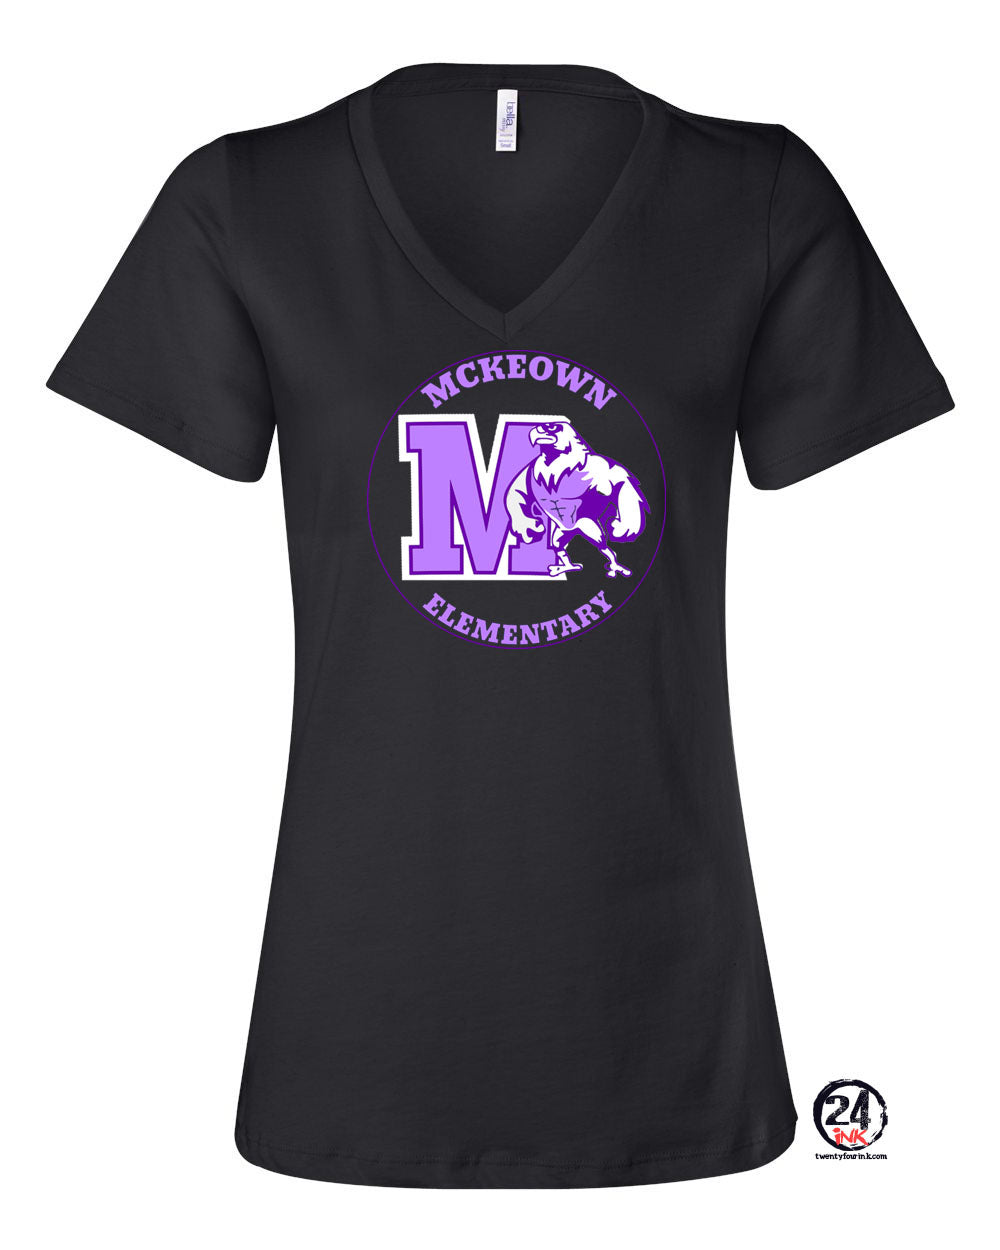 McKeown Design 12 V-neck T-Shirt